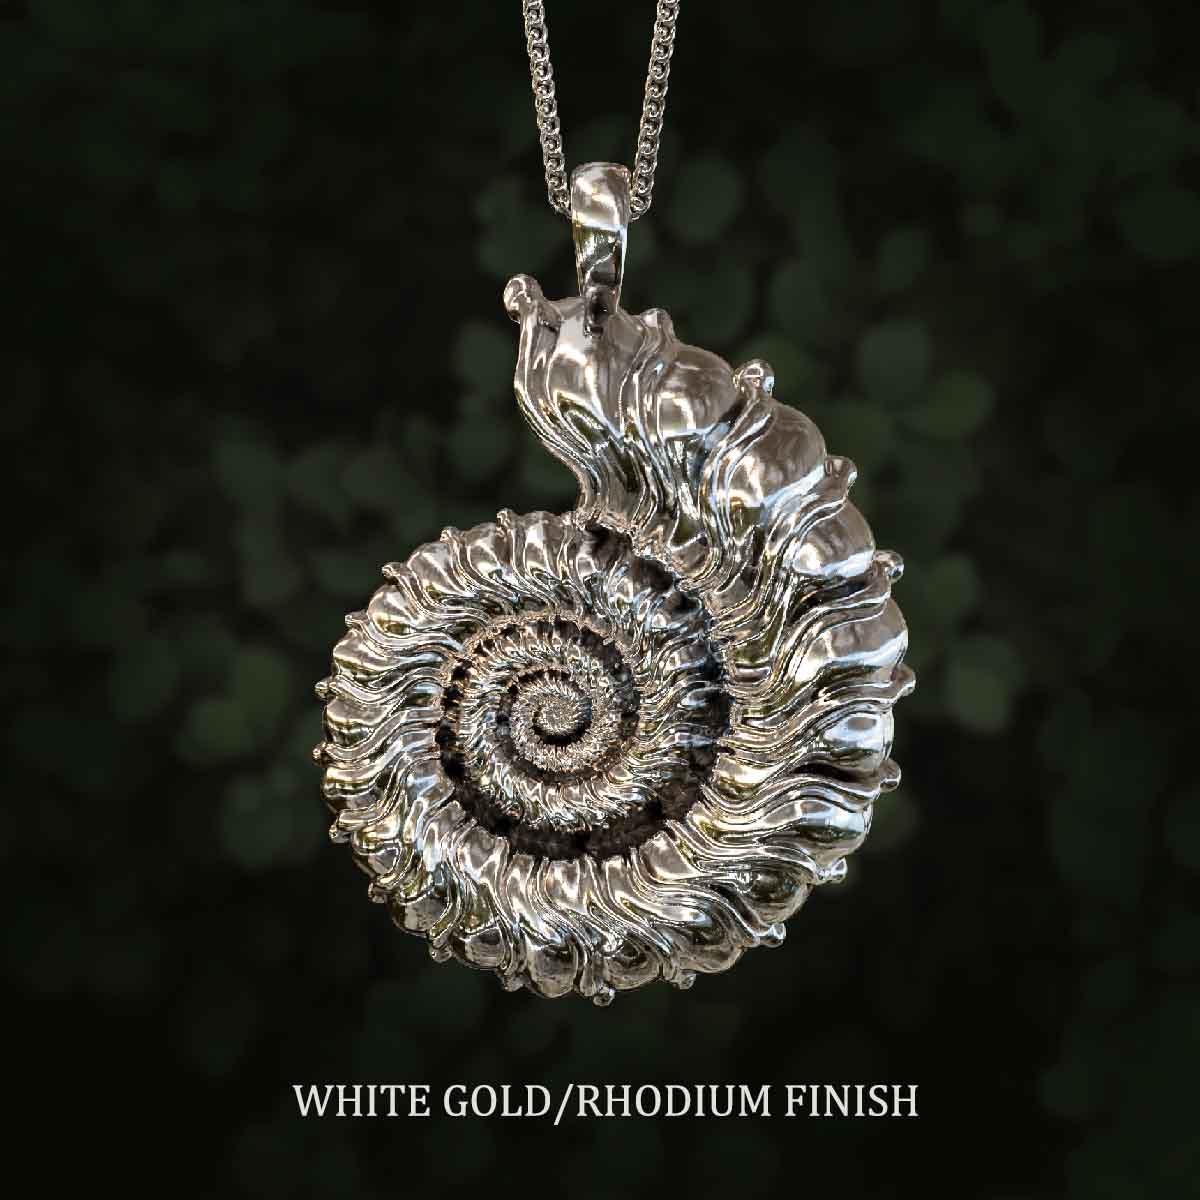 White-Gold-Rhodium-Finish-Ammonite-Pendant-Jewelry-For-Necklace